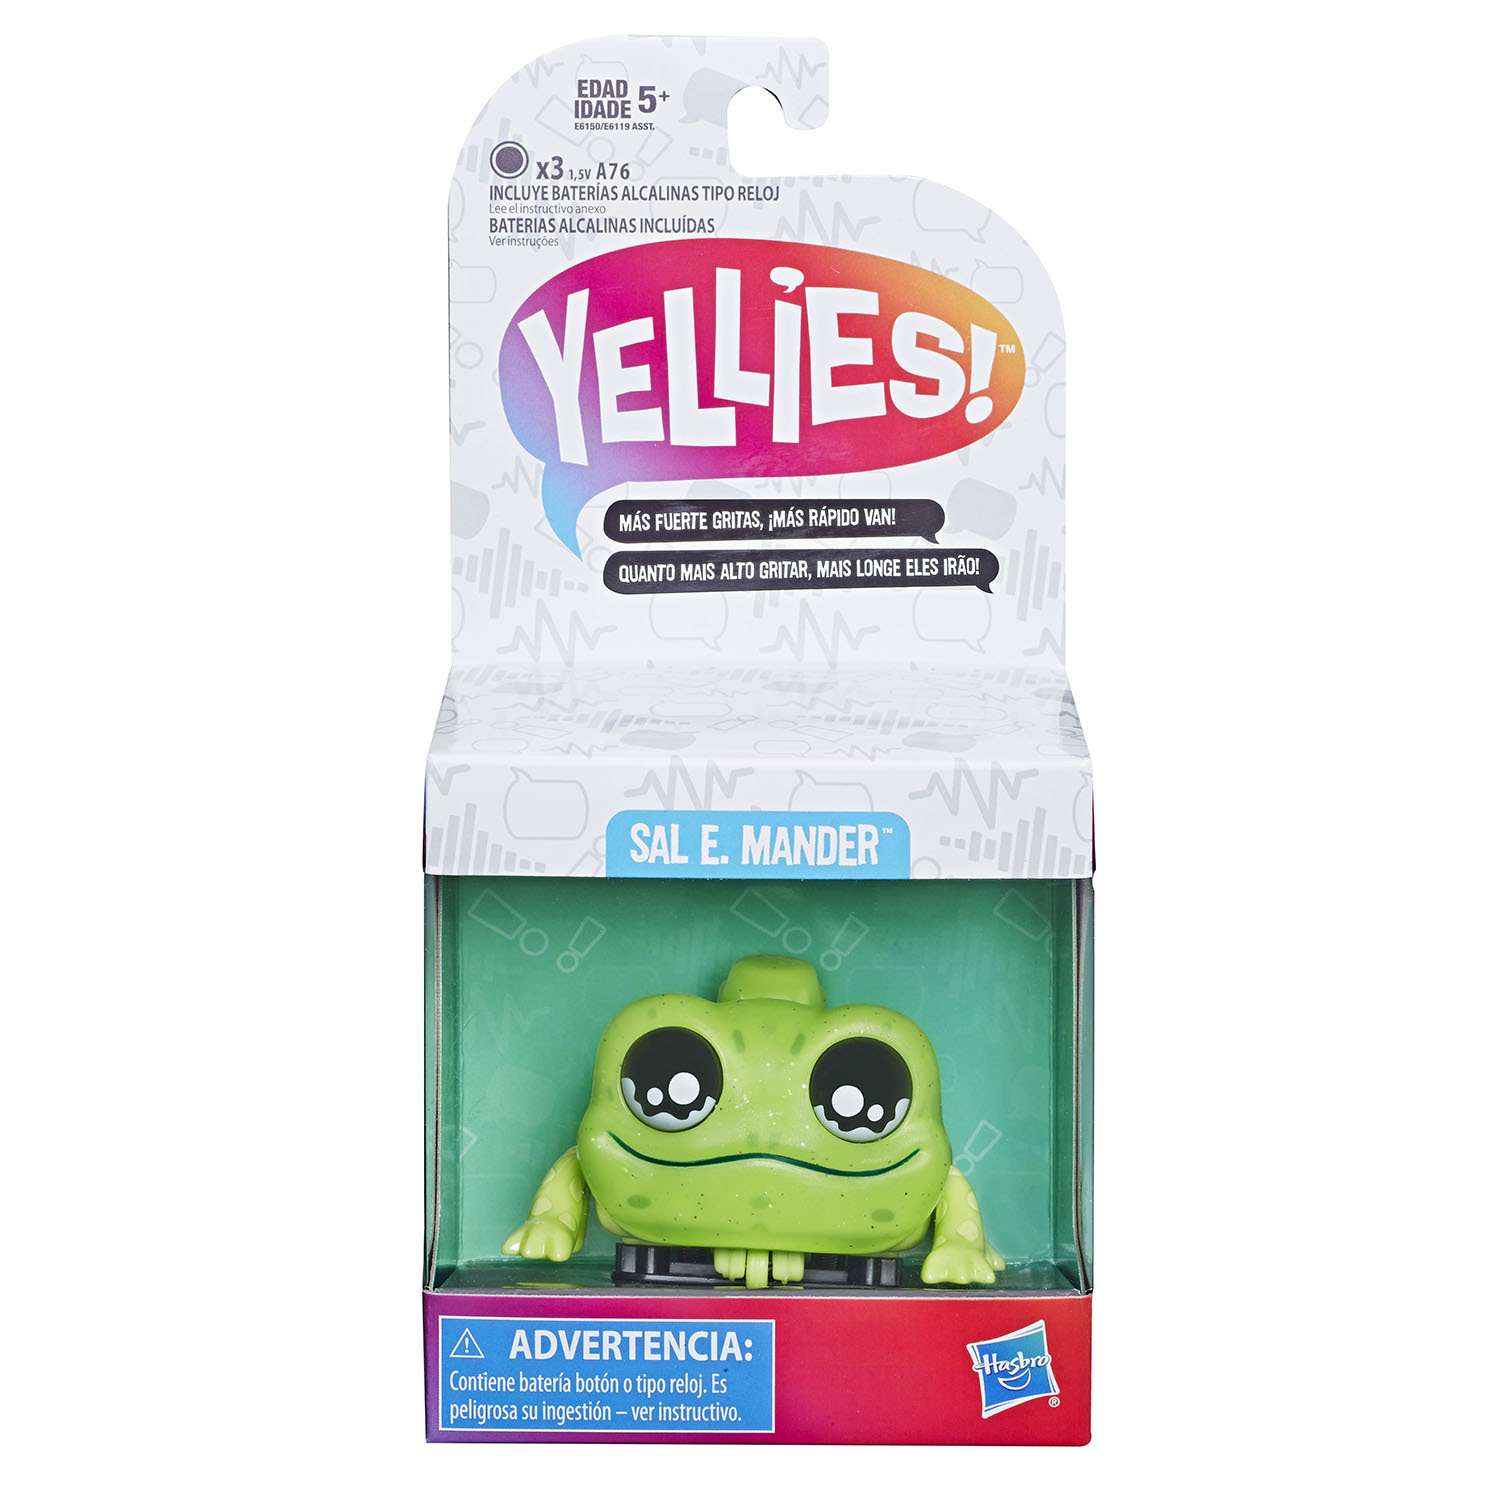 Игрушка Yellies (Yellies) Ящерица Салмандер интерактивная E6150EU4 - фото 2